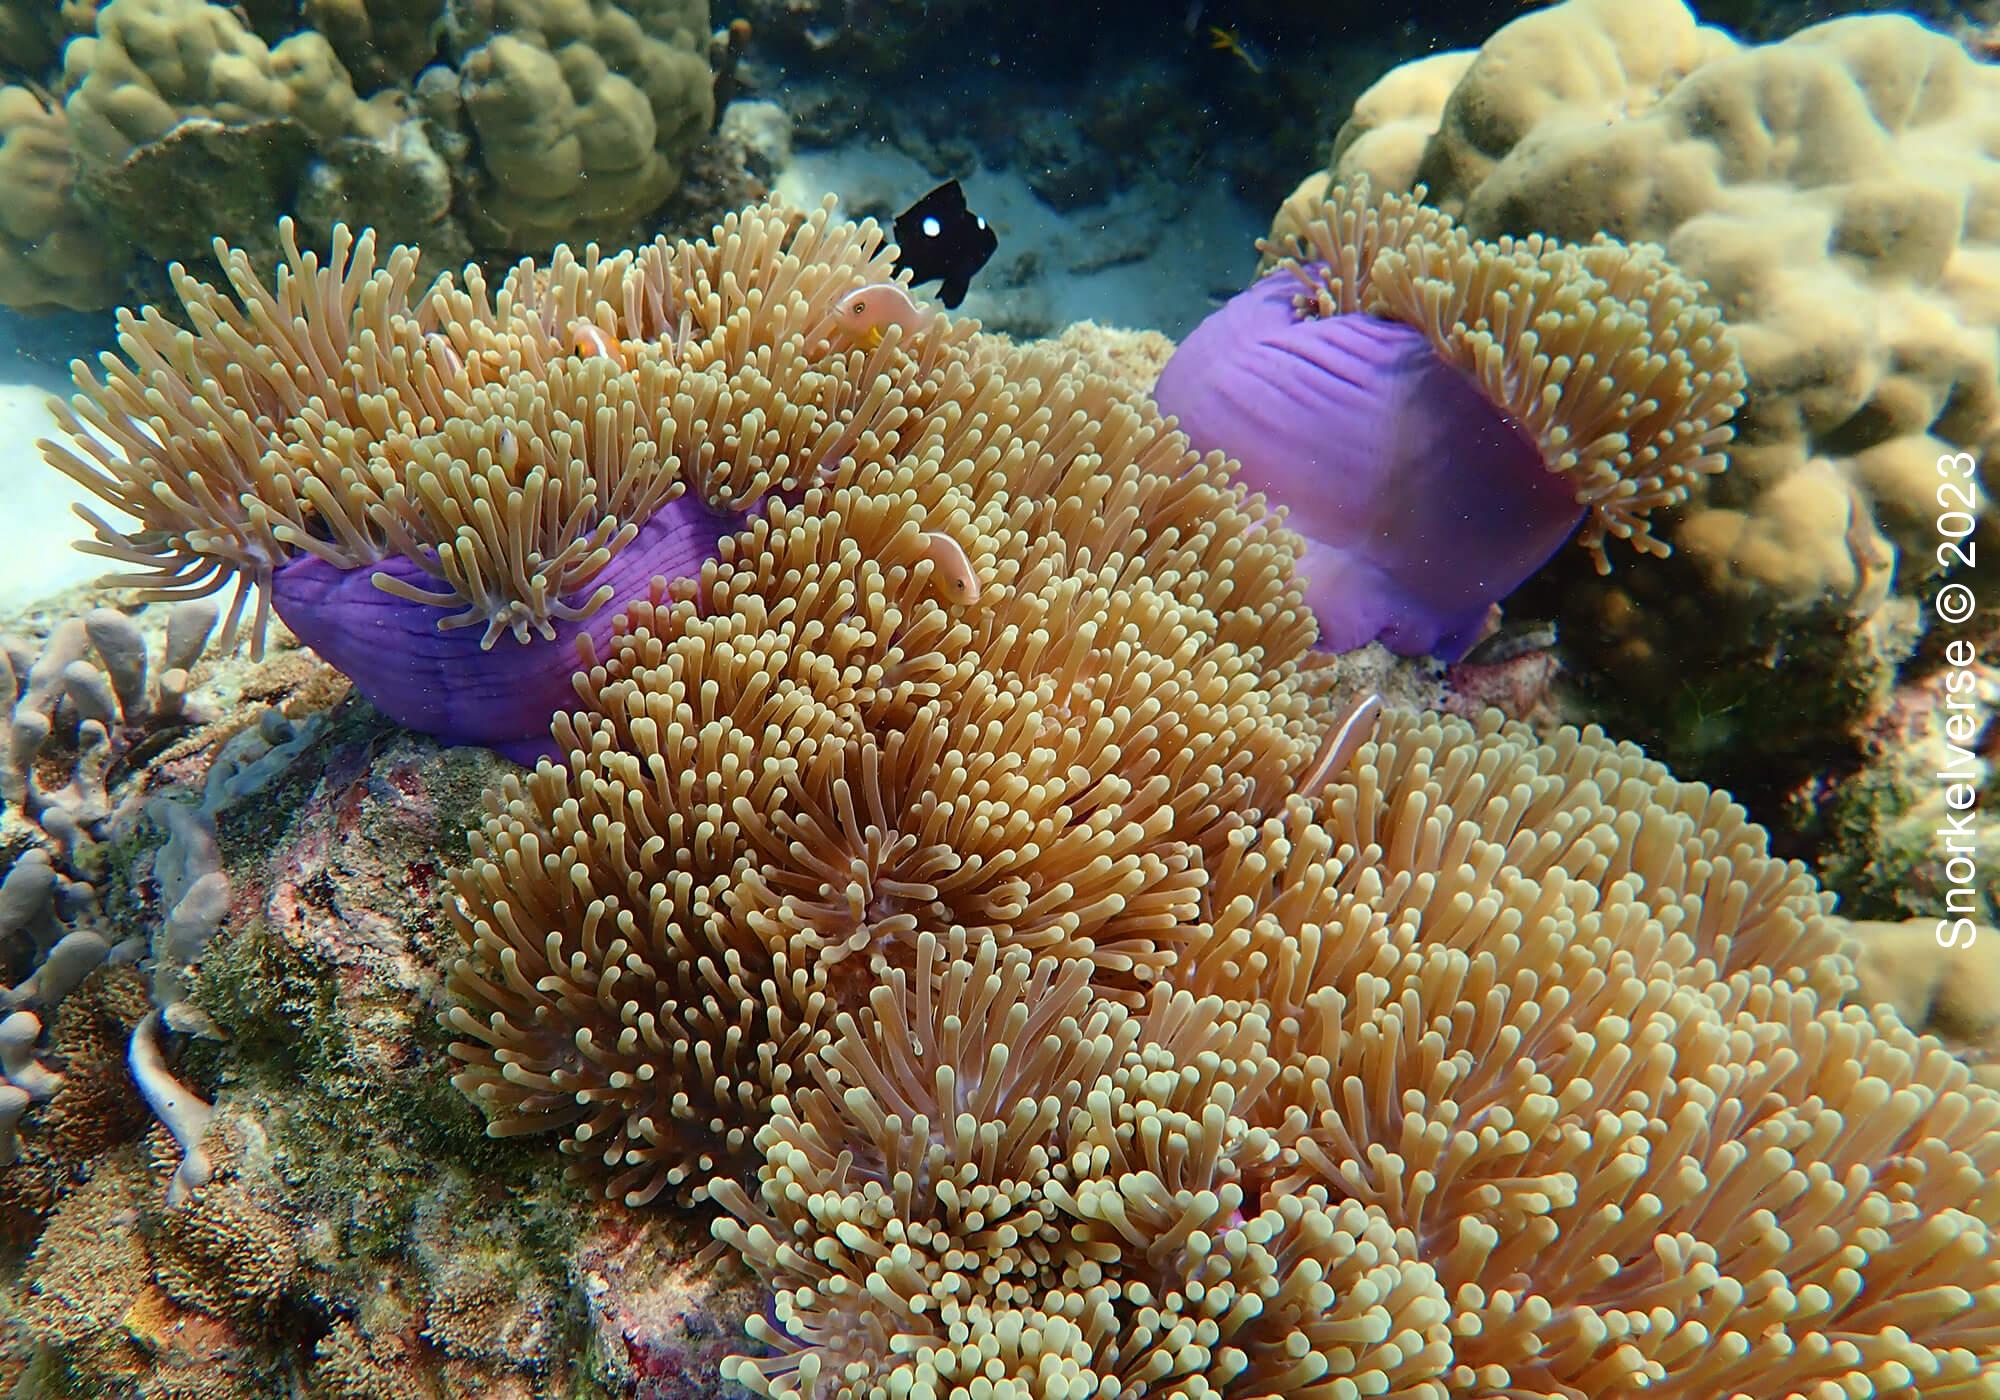 Anenomefish in the Anemone